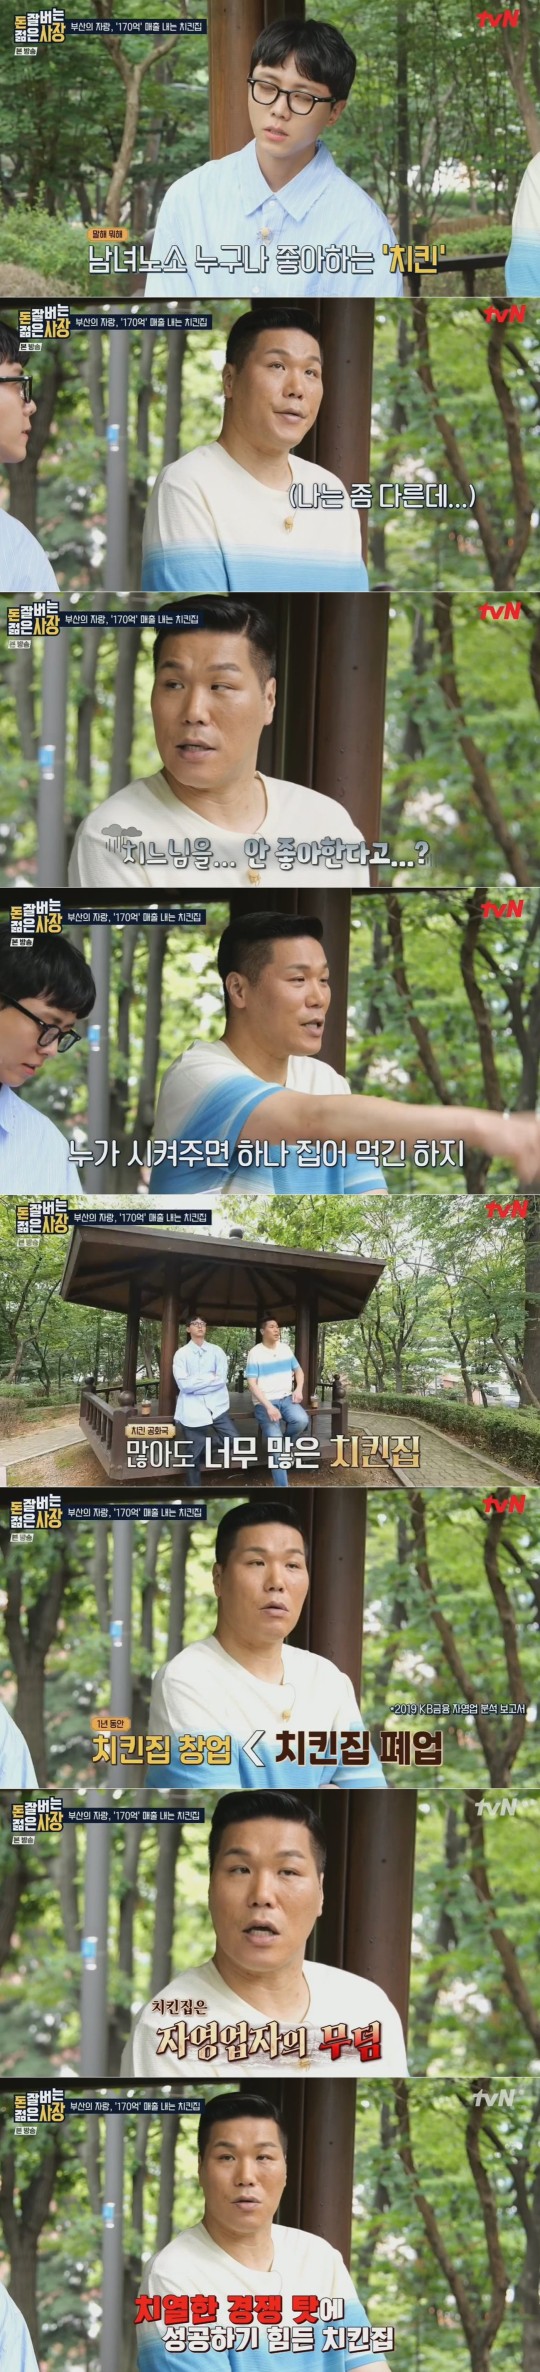 tvN ‘돈 잘 버는 젊은 사장’ 캡처